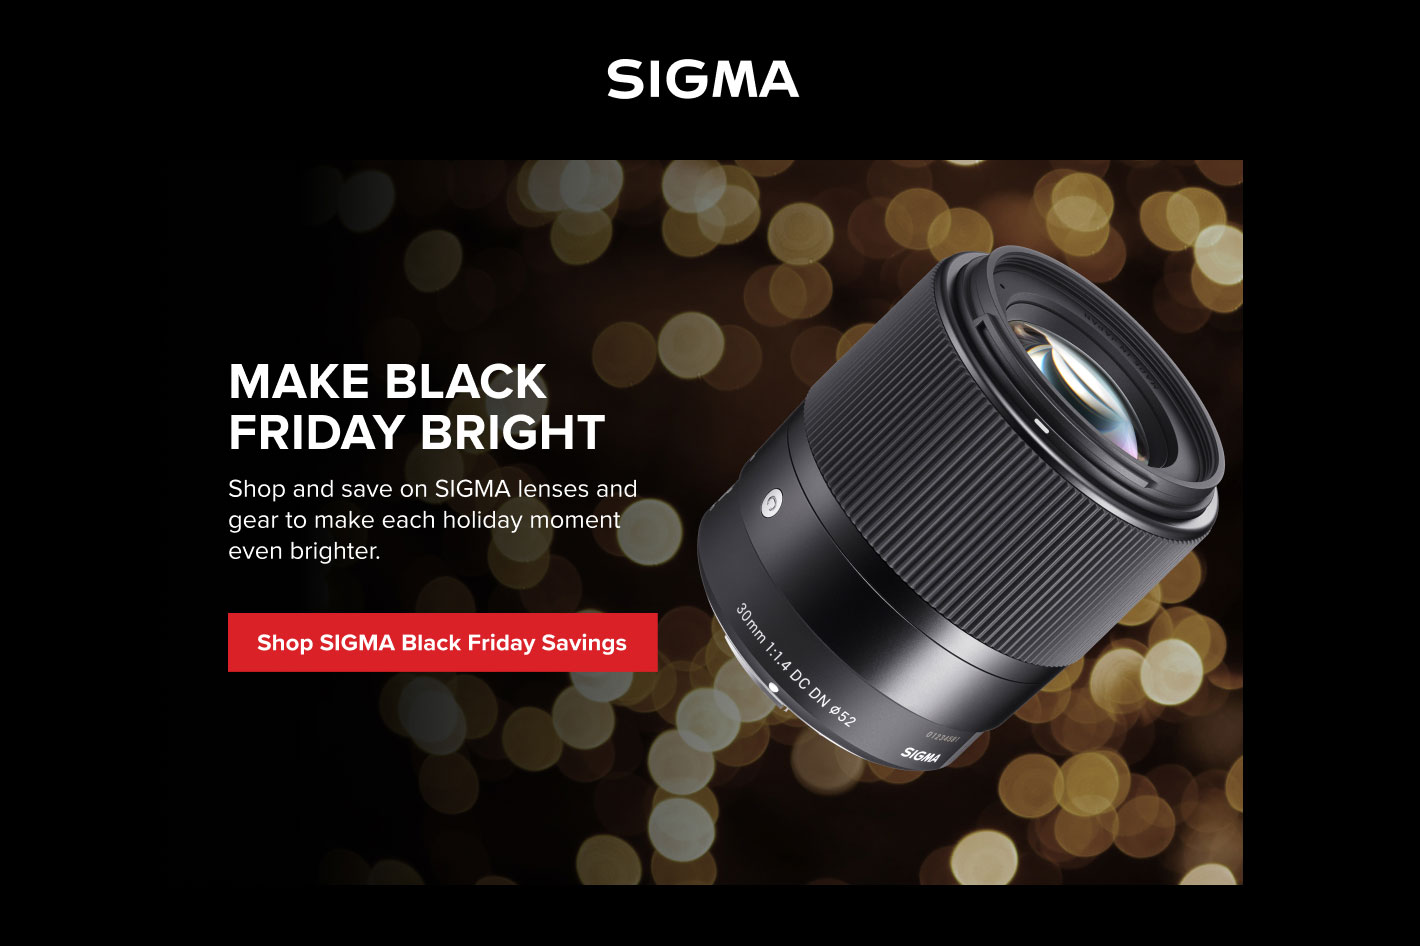 Make Black Friday Bright… with Sigma